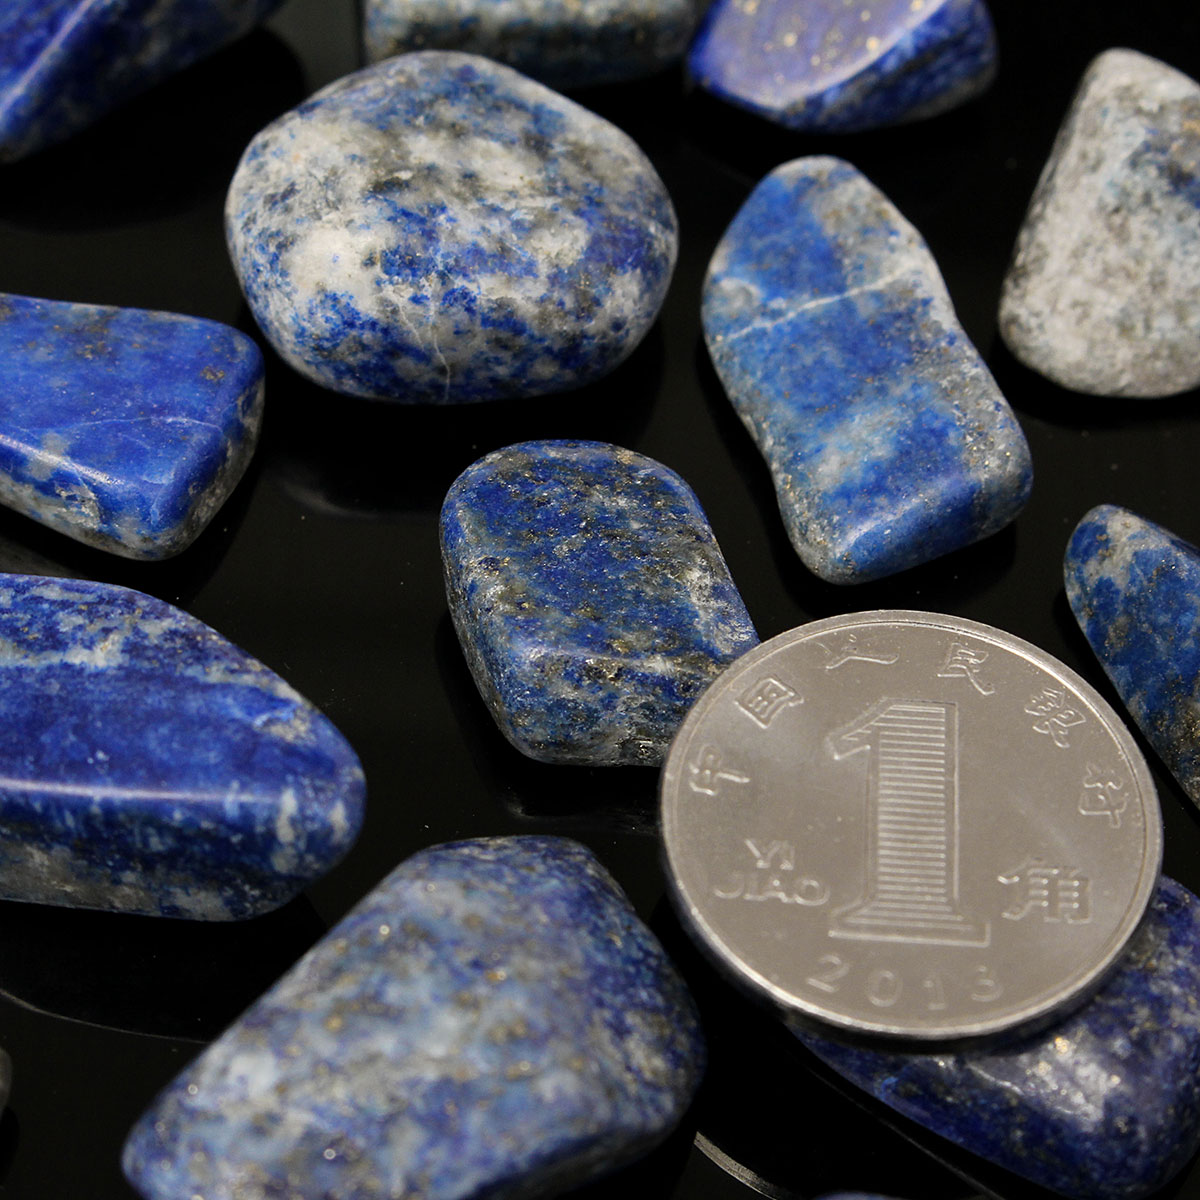 50g Blue Lapis Lazuli Rough Stone Rock Specimen Home Decoration Craft